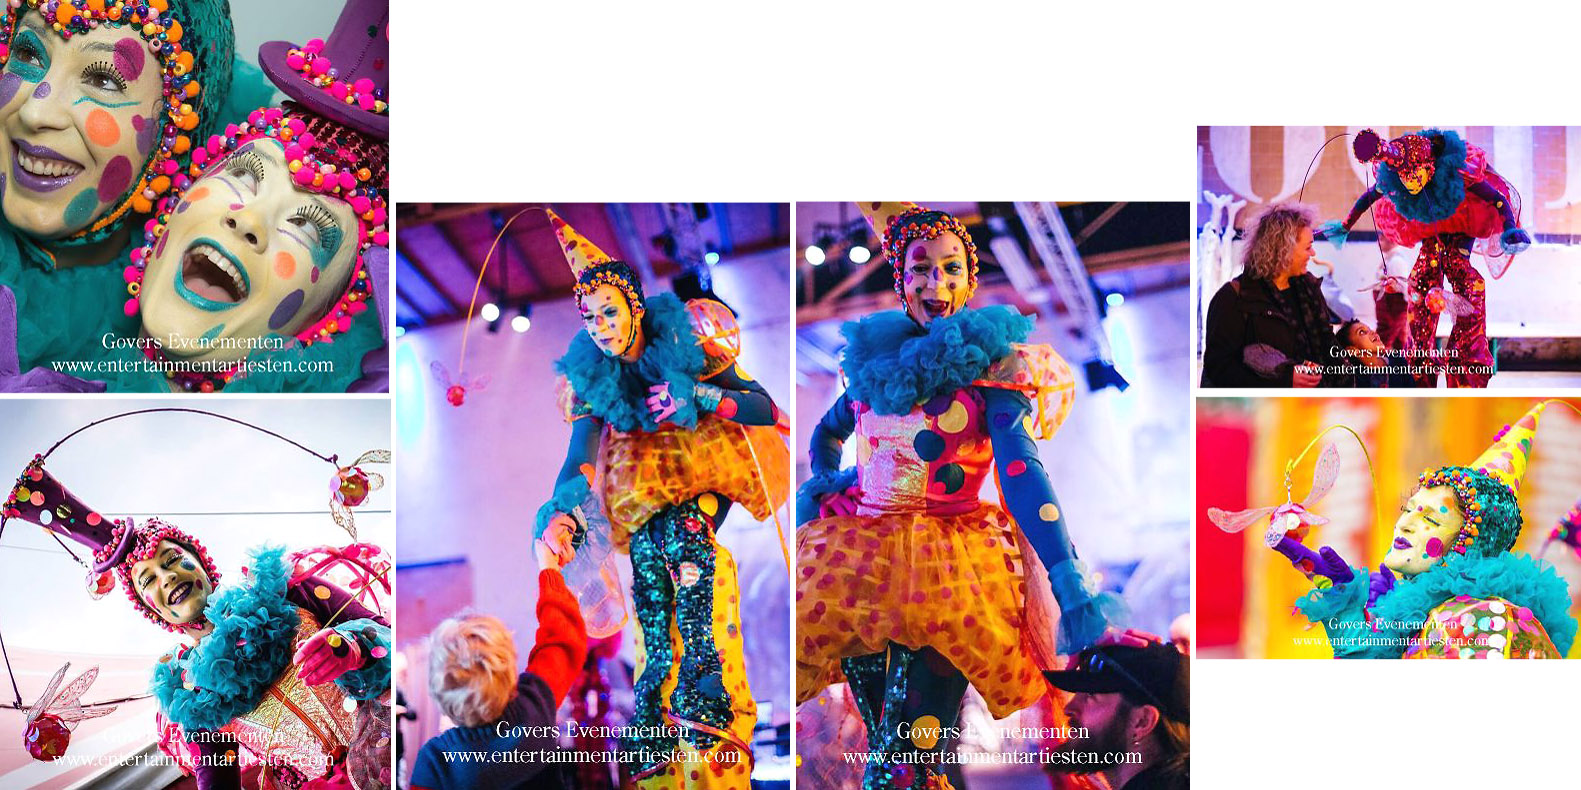 Carnavale, Een kleurrijke steltenact, steltentheater, steltenlopers, feest, feestje, snoepjes, promotie op stelten, Govers Evenementen, www.goversartiesten.nl